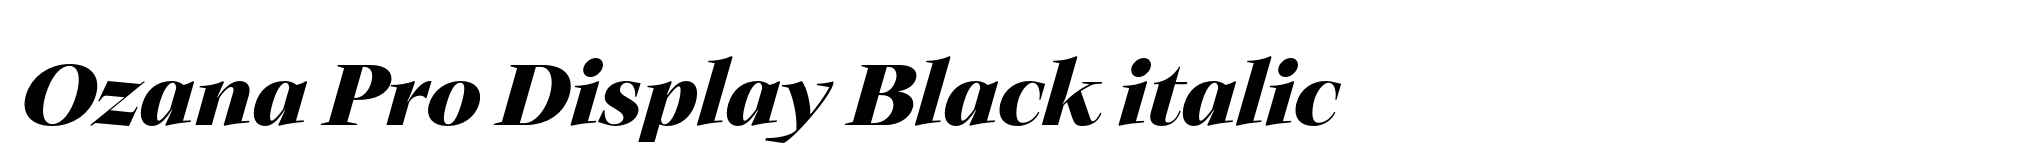 Ozana Pro Display Black italic image